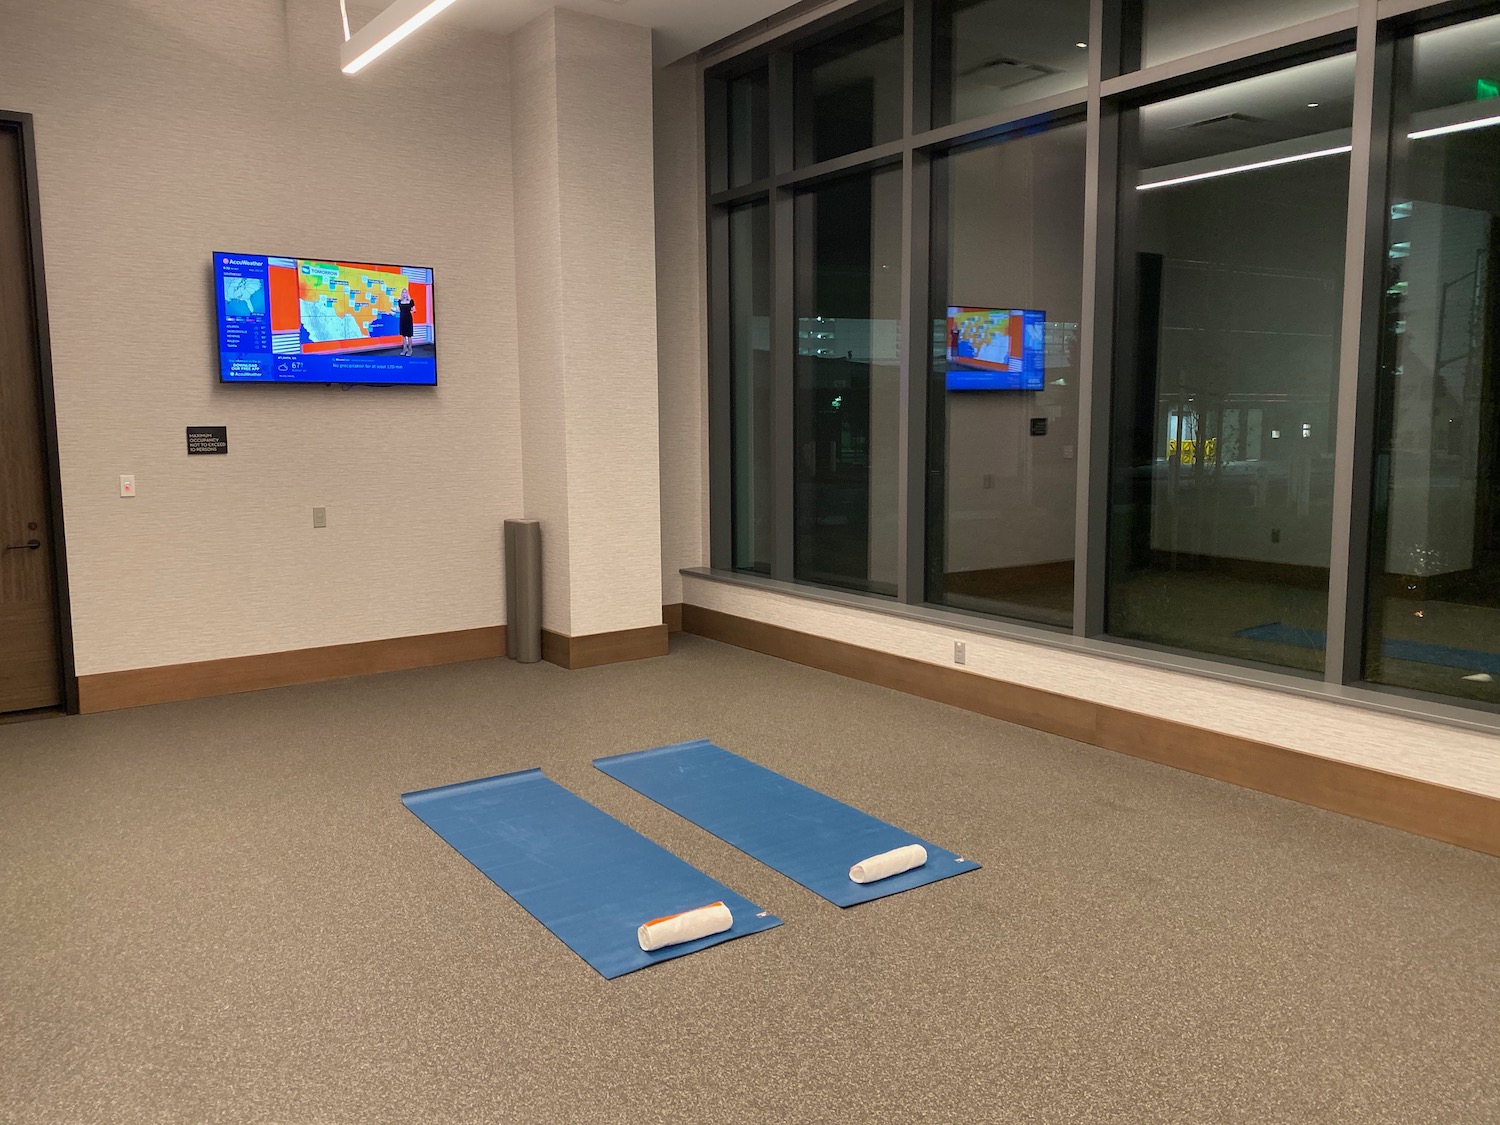 a yoga mat in a room